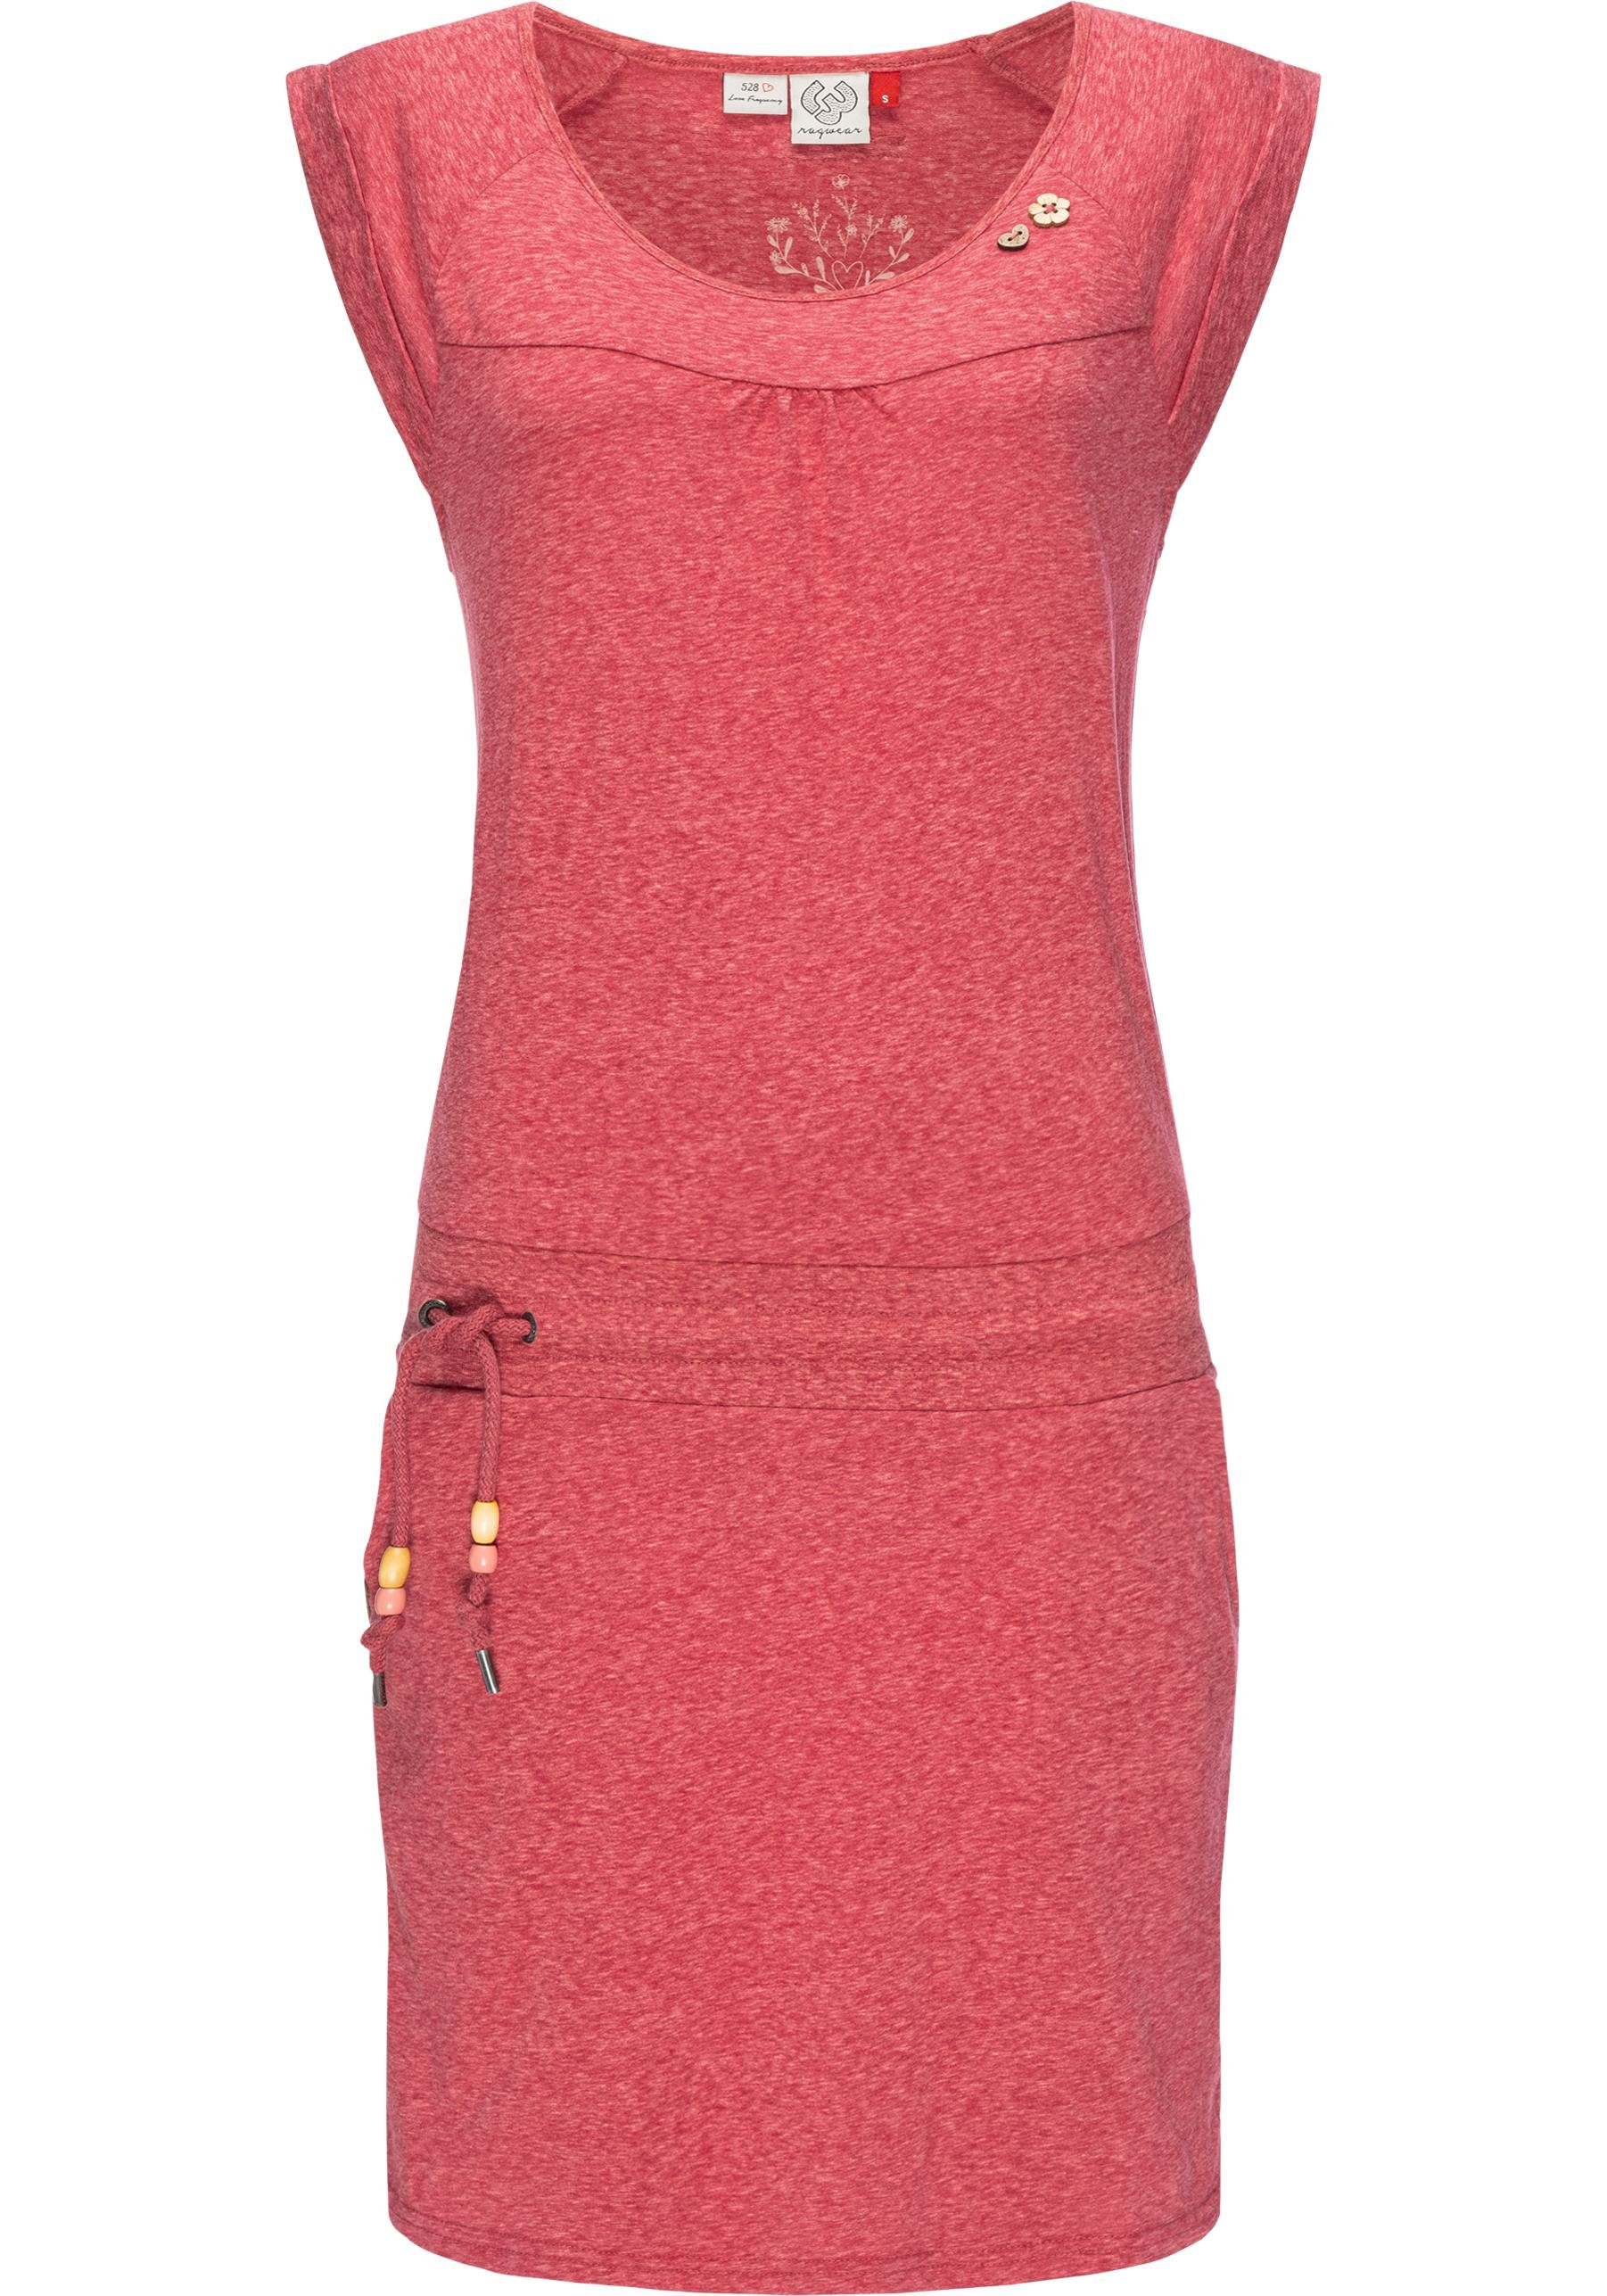 Ragwear Sommerkleid Penelope leichtes Baumwoll Kleid mit Print karminrot | Wickelkleider